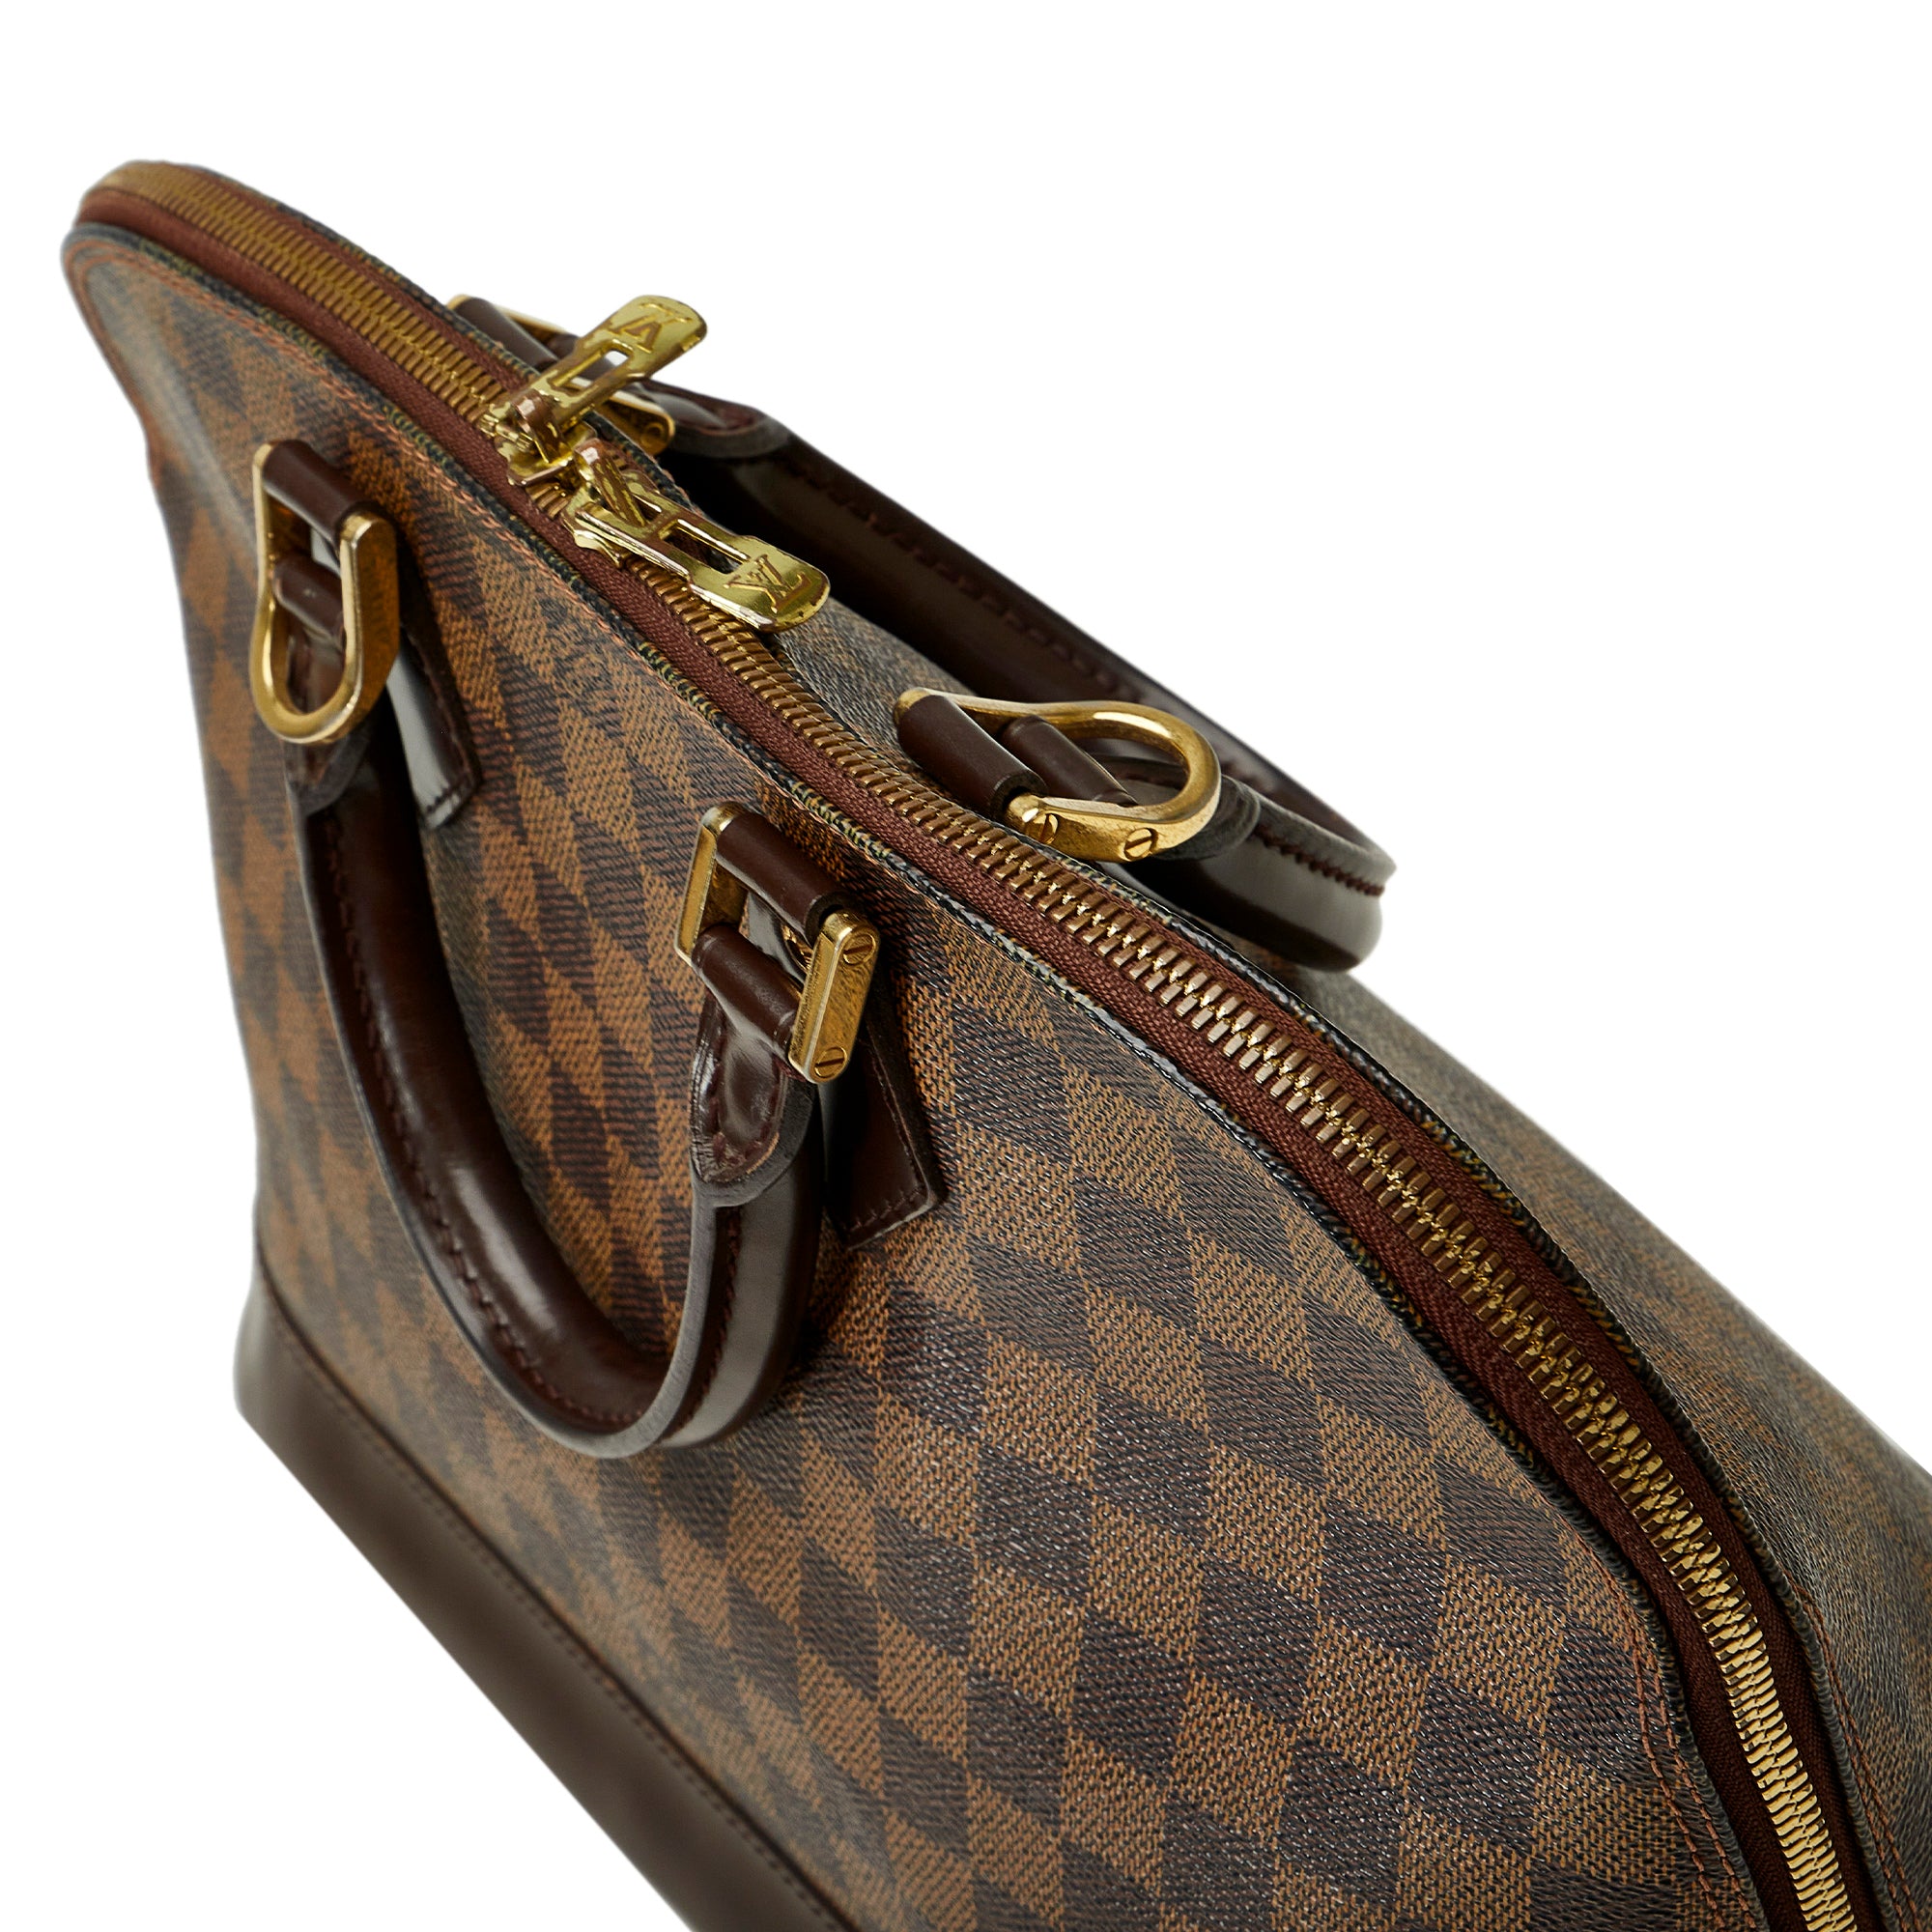 Louis Vuitton Vintage - Damier Ebene Alma PM Bag - Brown - Leather